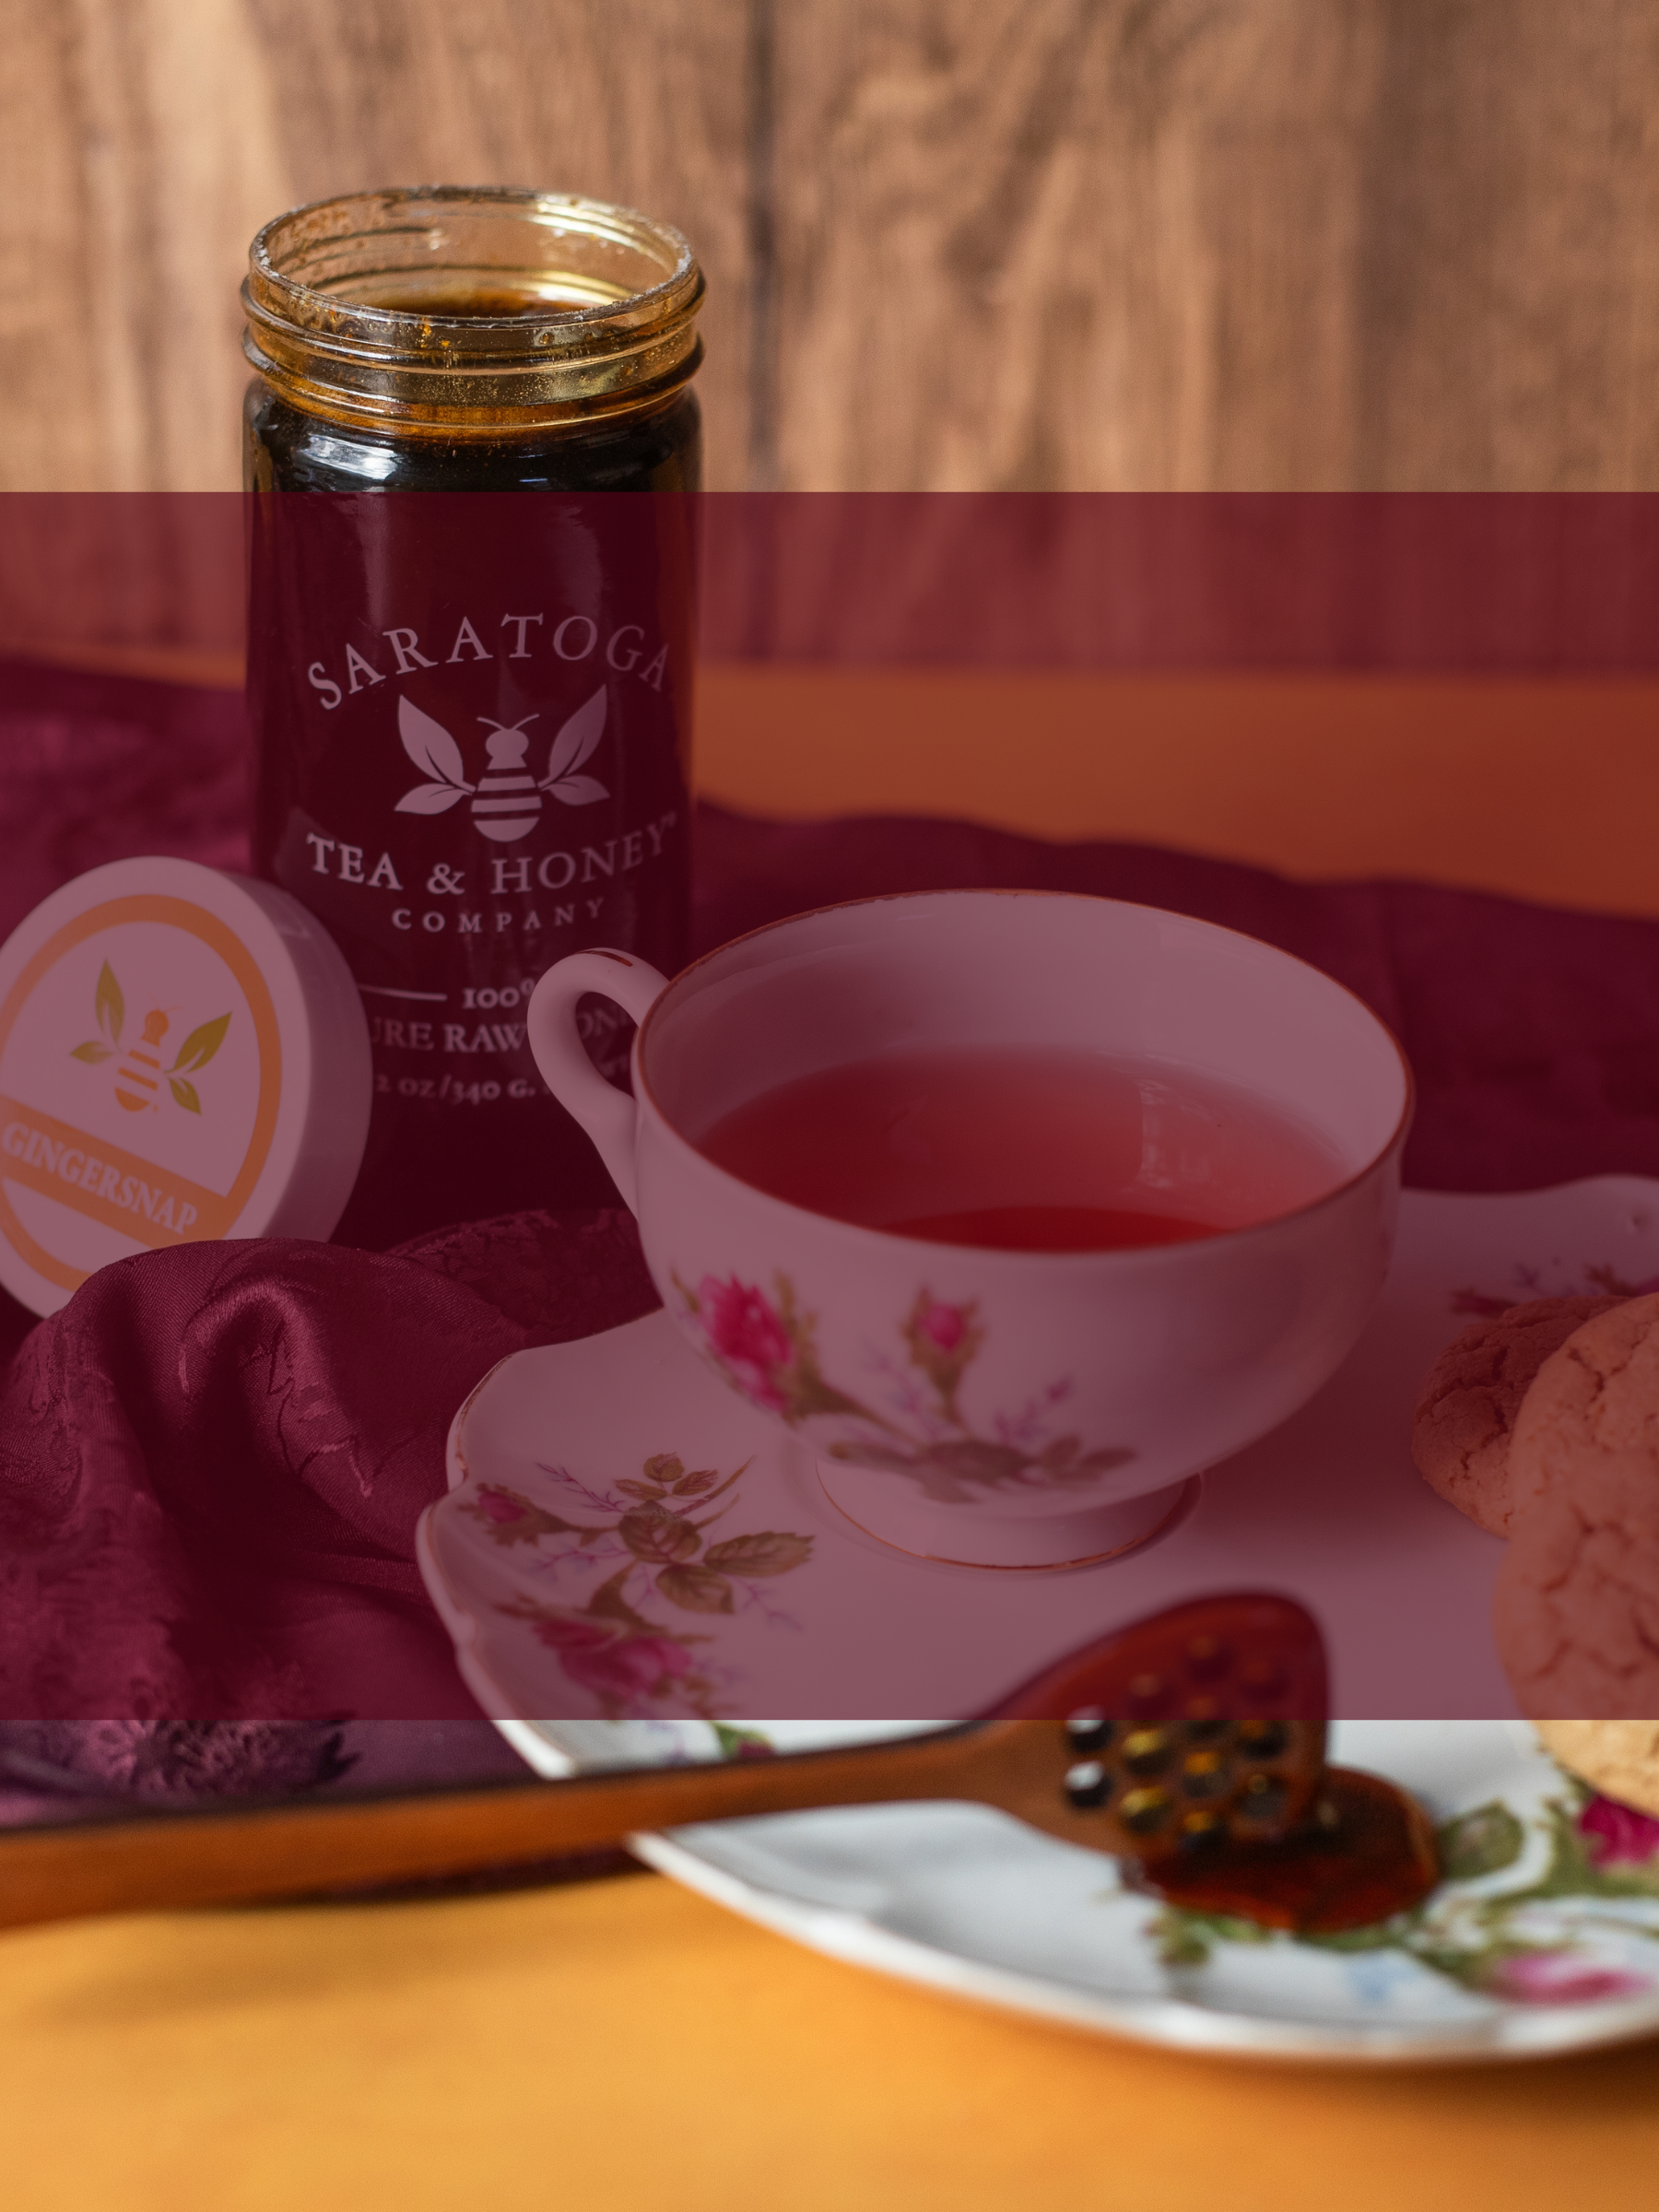 Brewing Loose Leaf Tea at Home - Destination Tea